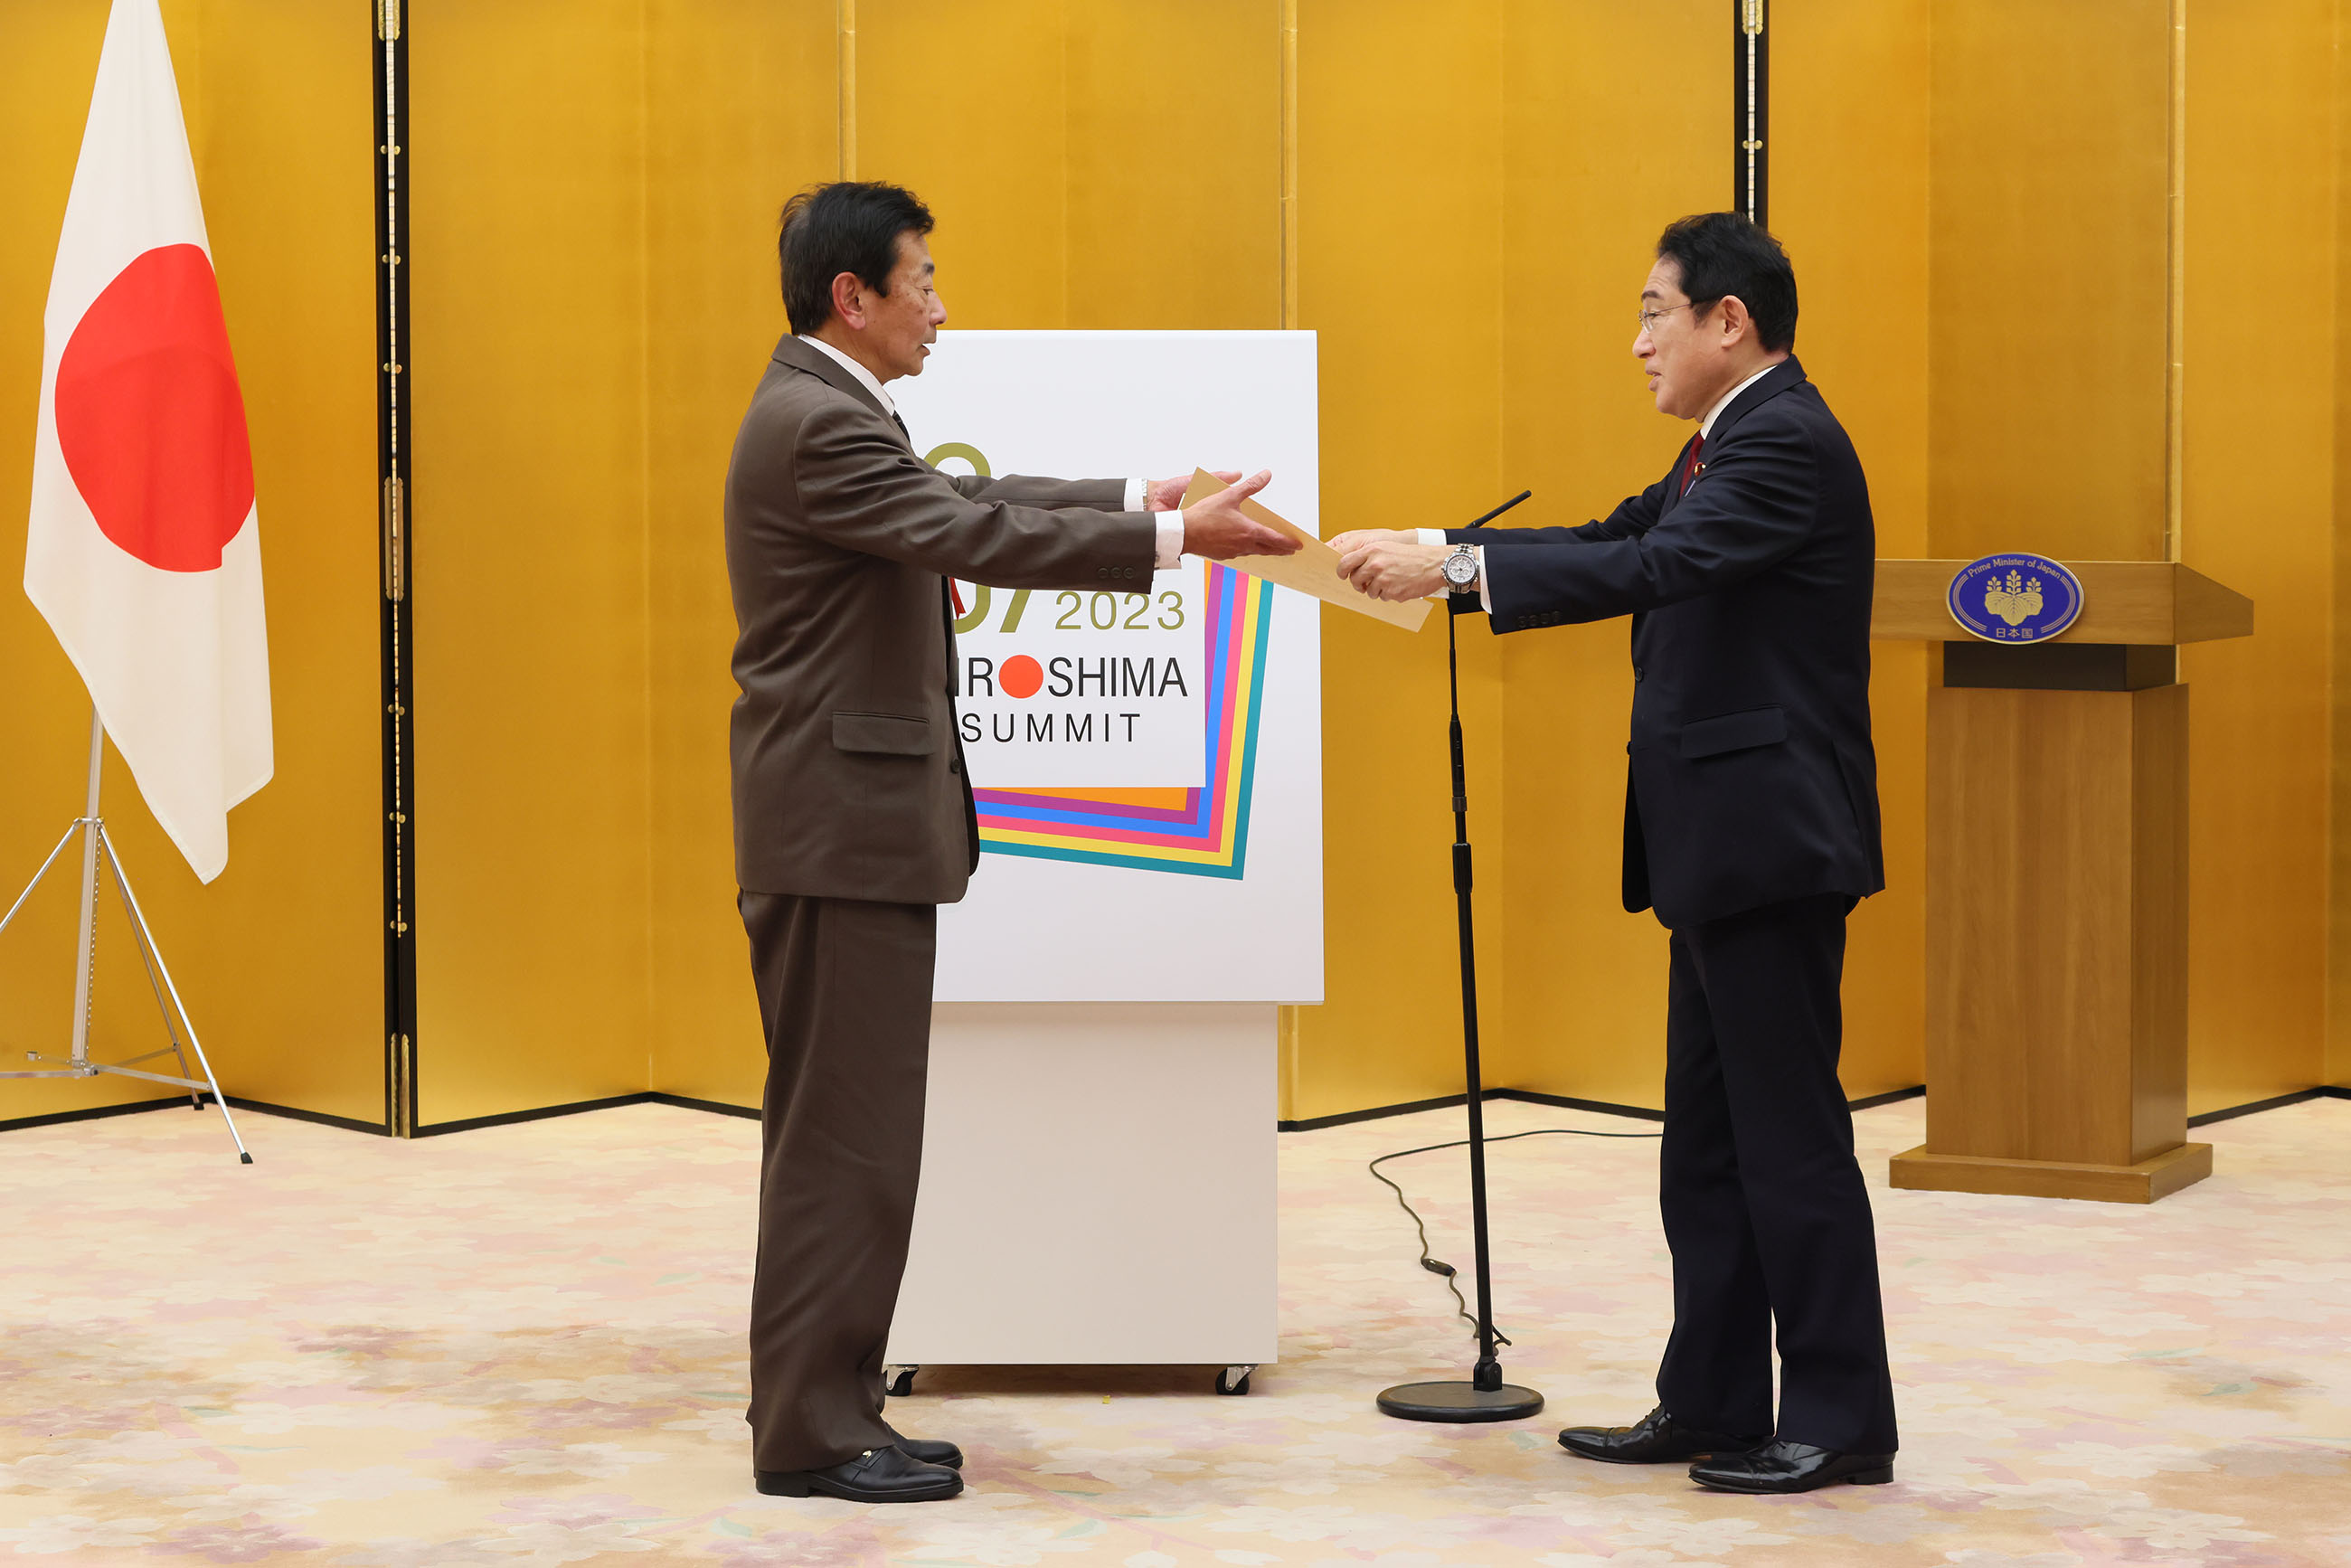 Prime Minister Kishida presenting the award